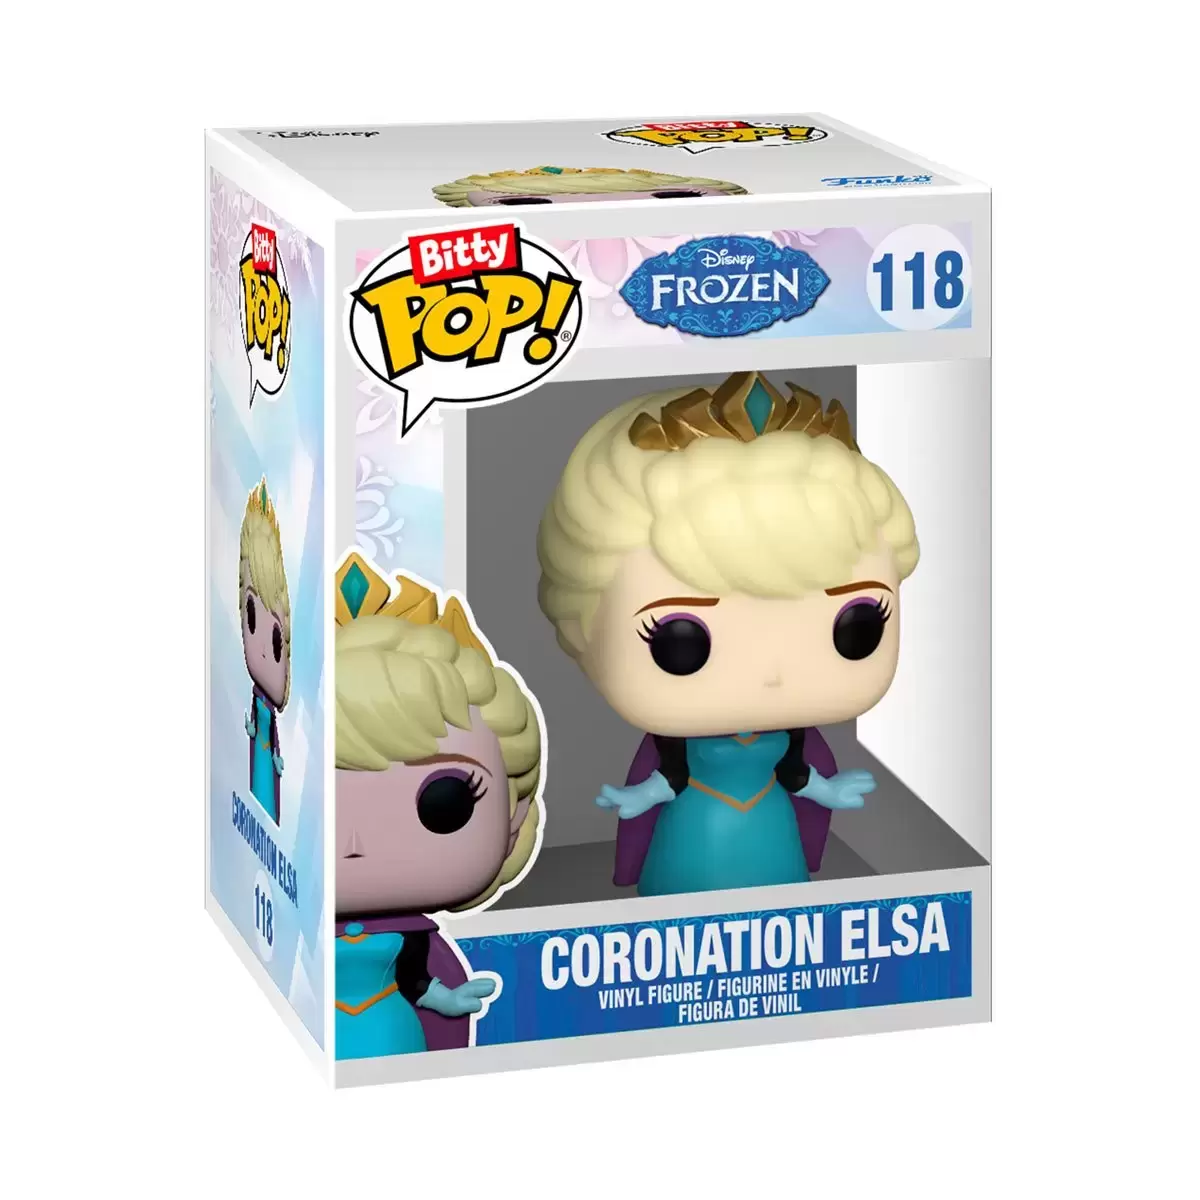 Bitty POP! - Disney Princess - Coronation Elsa